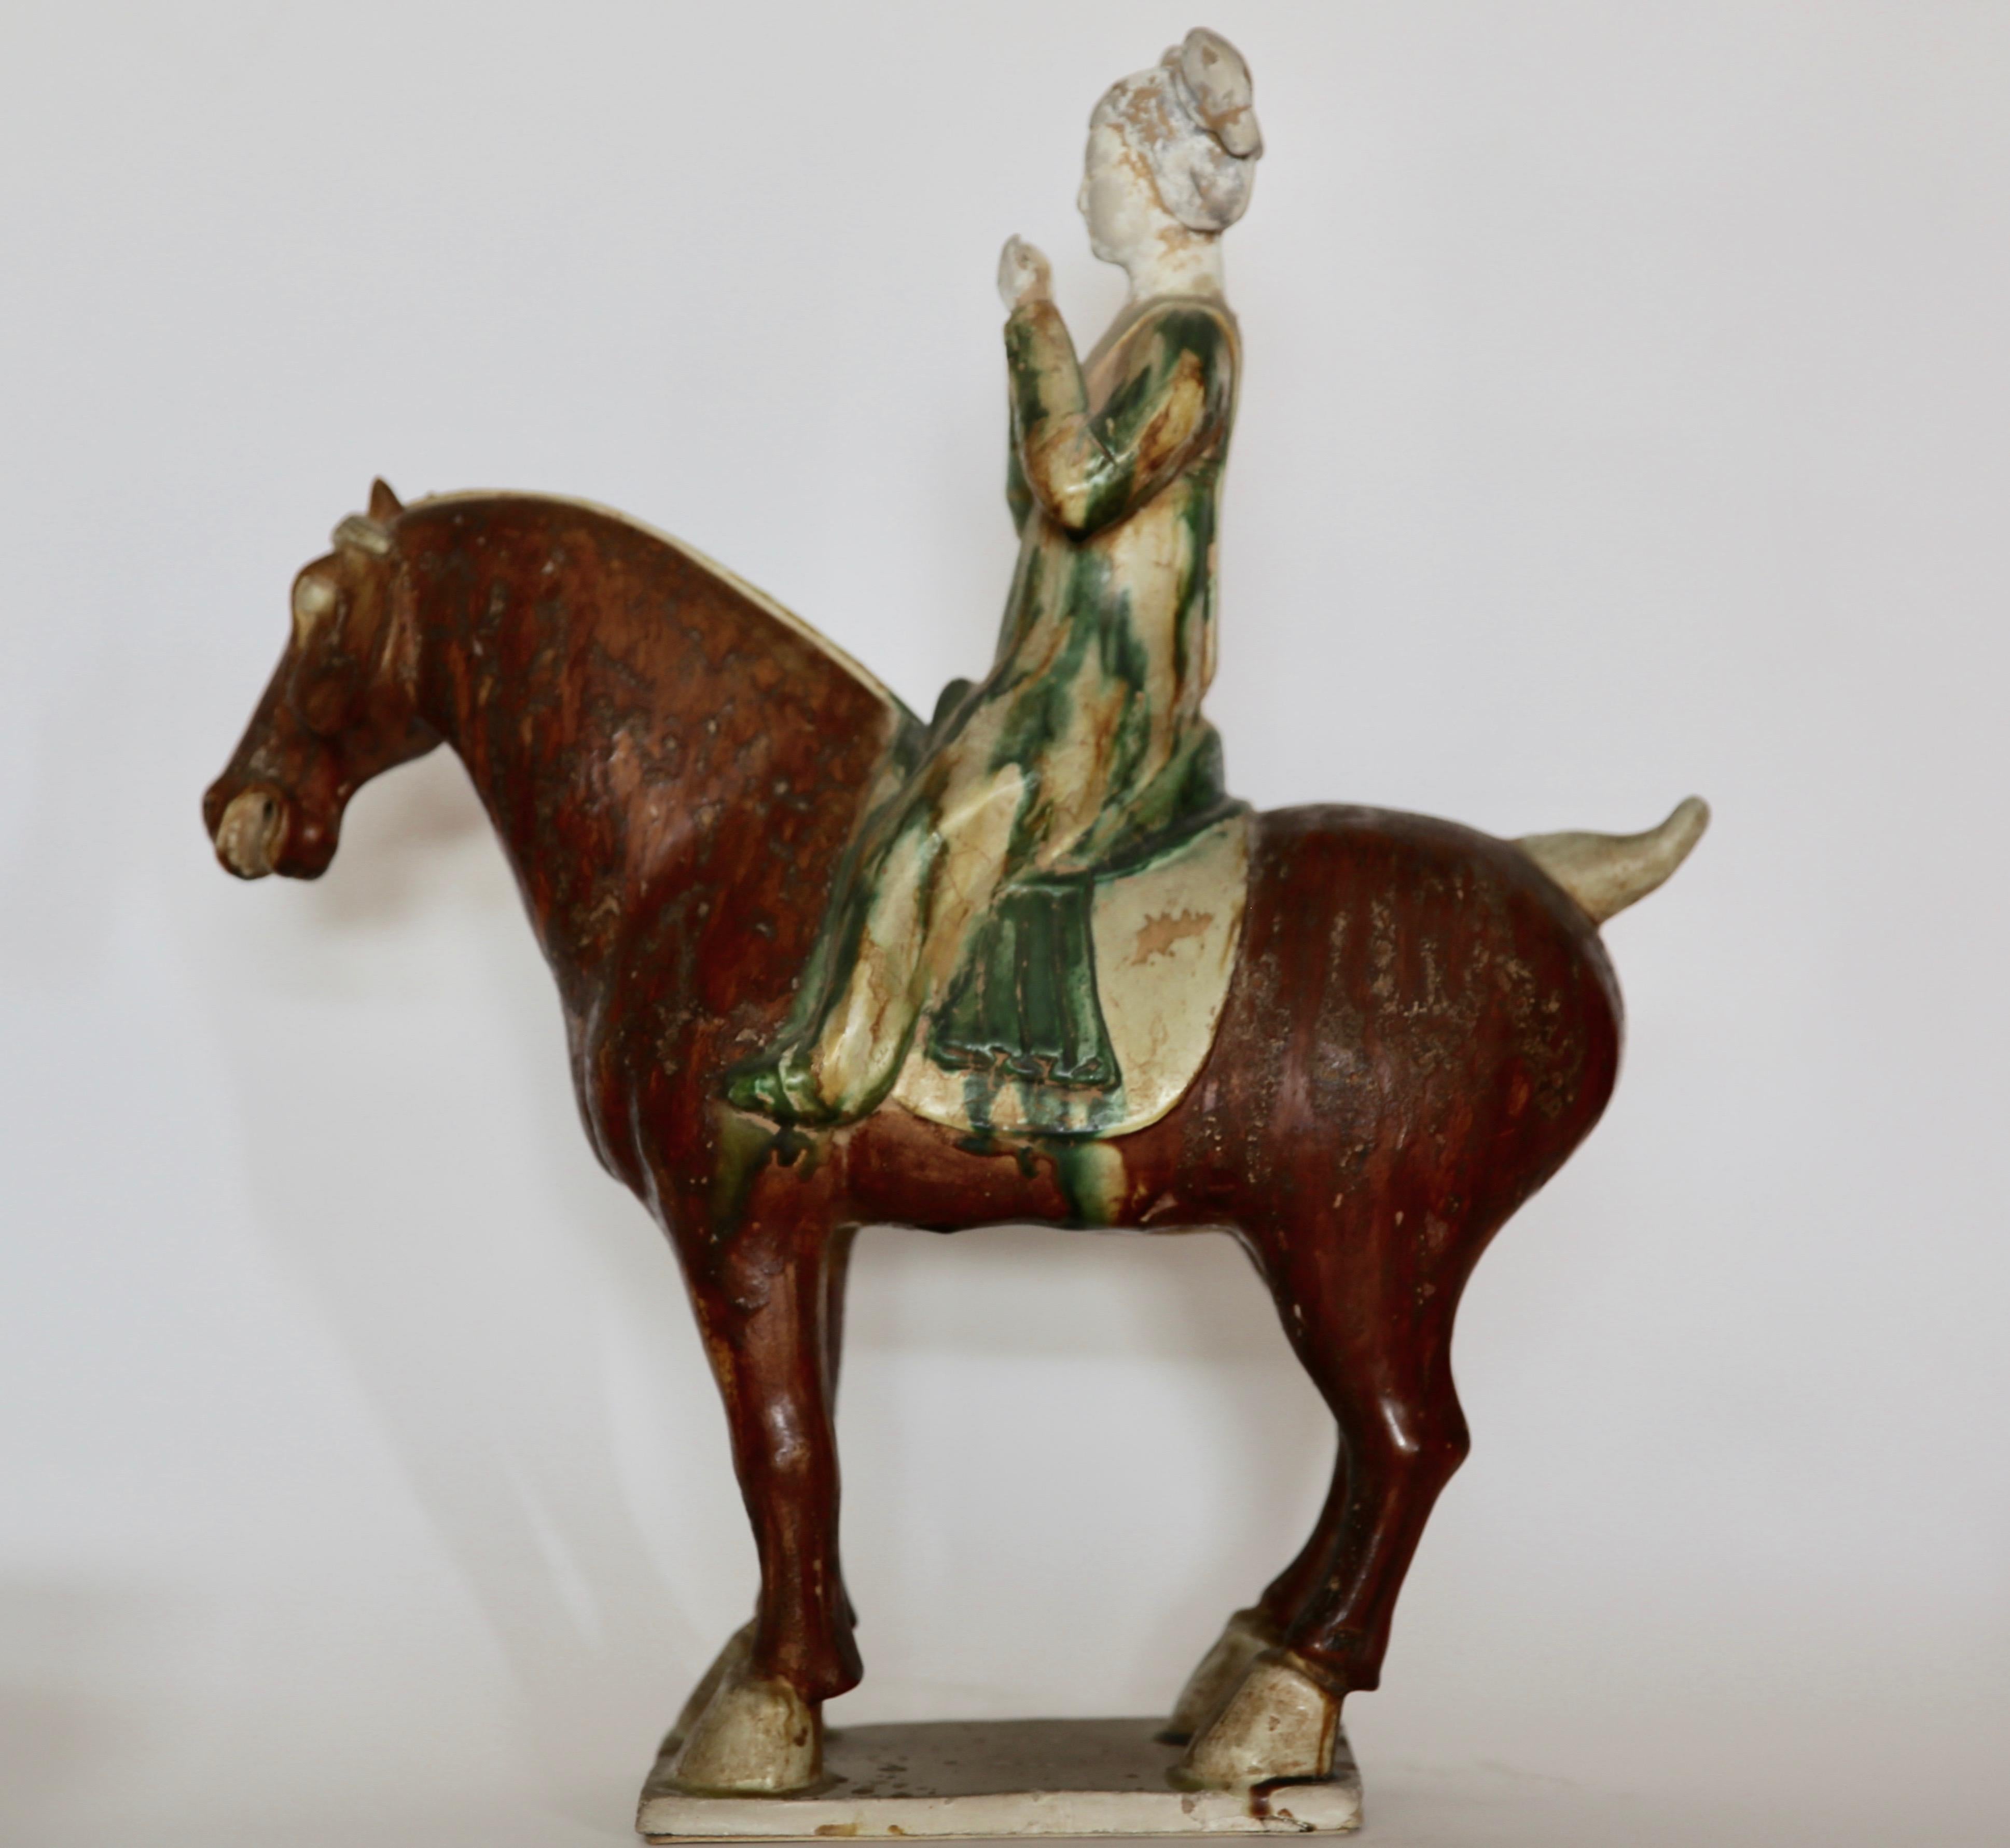 Sancai glazed terracotta tang horse with musician.
Great antique condition.
Dimensions: 47 cm x 41 cm x 16 cm.